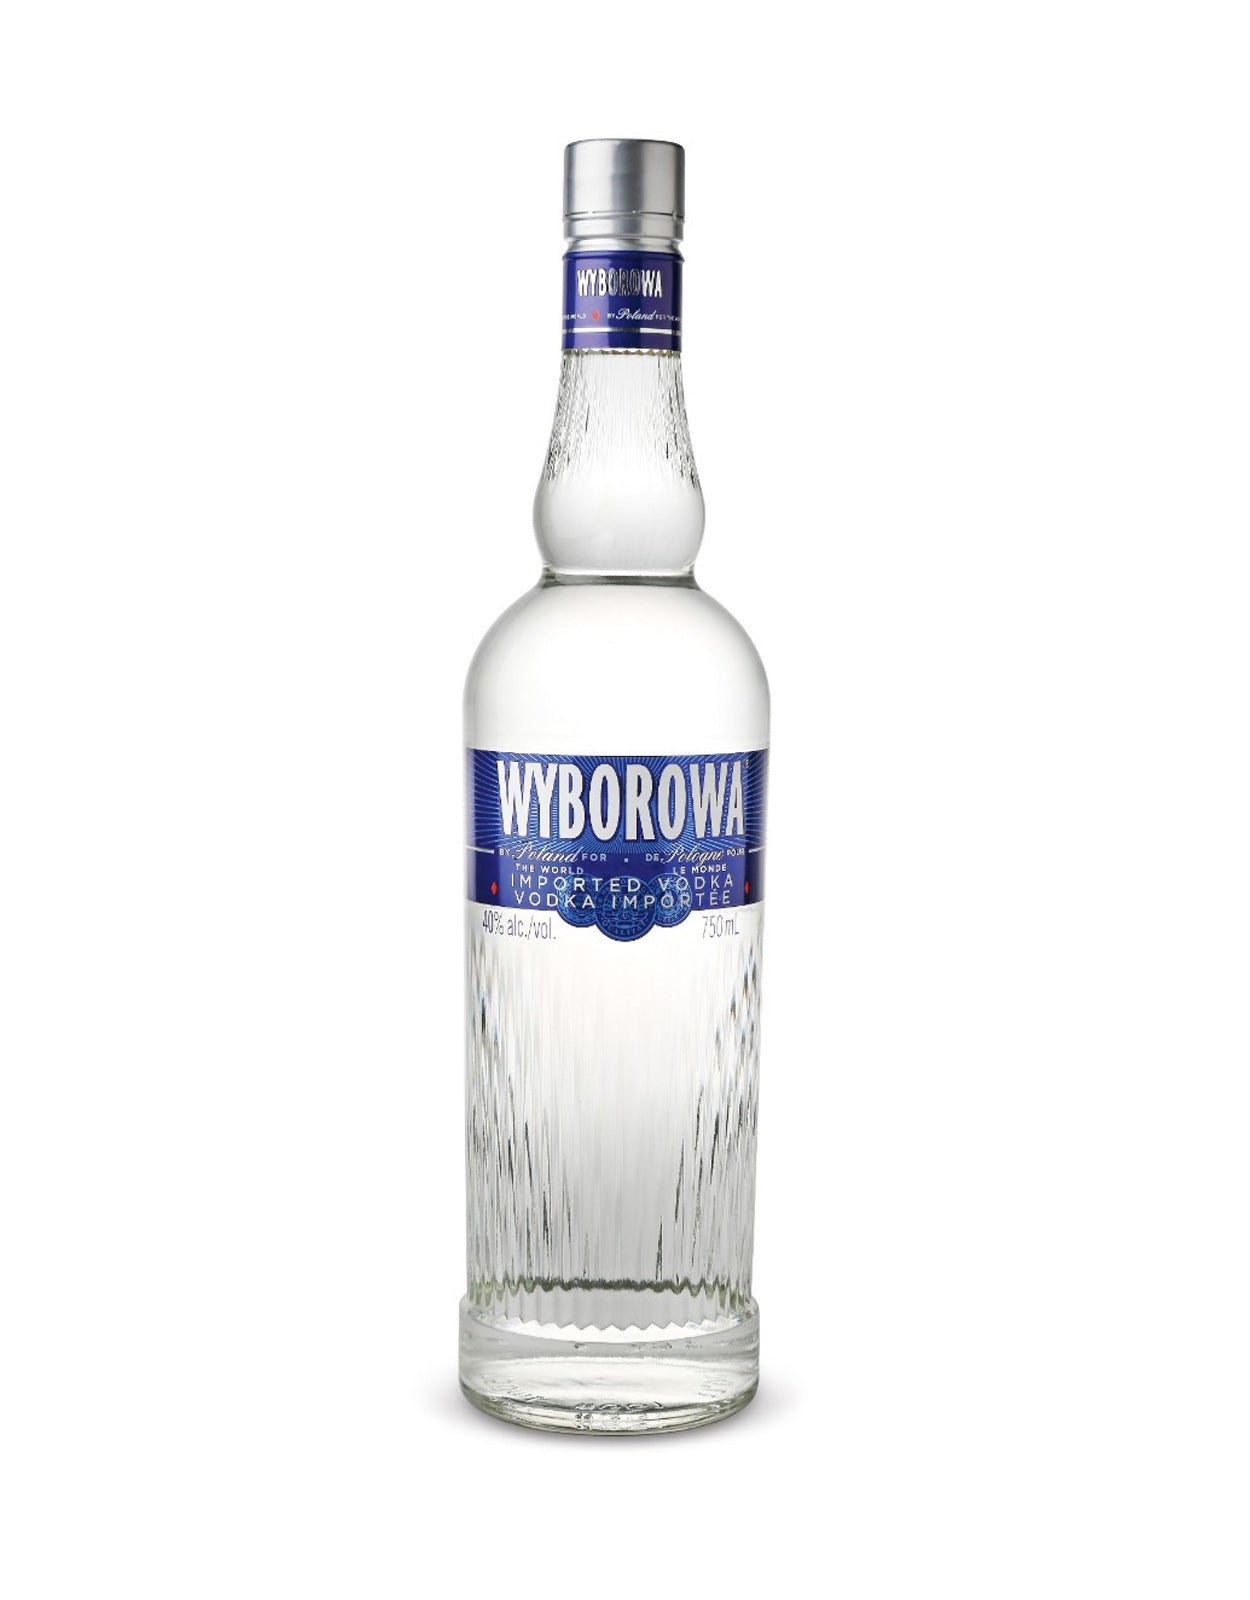 Wyborowa Vodka - 1.14 Litre Bottle